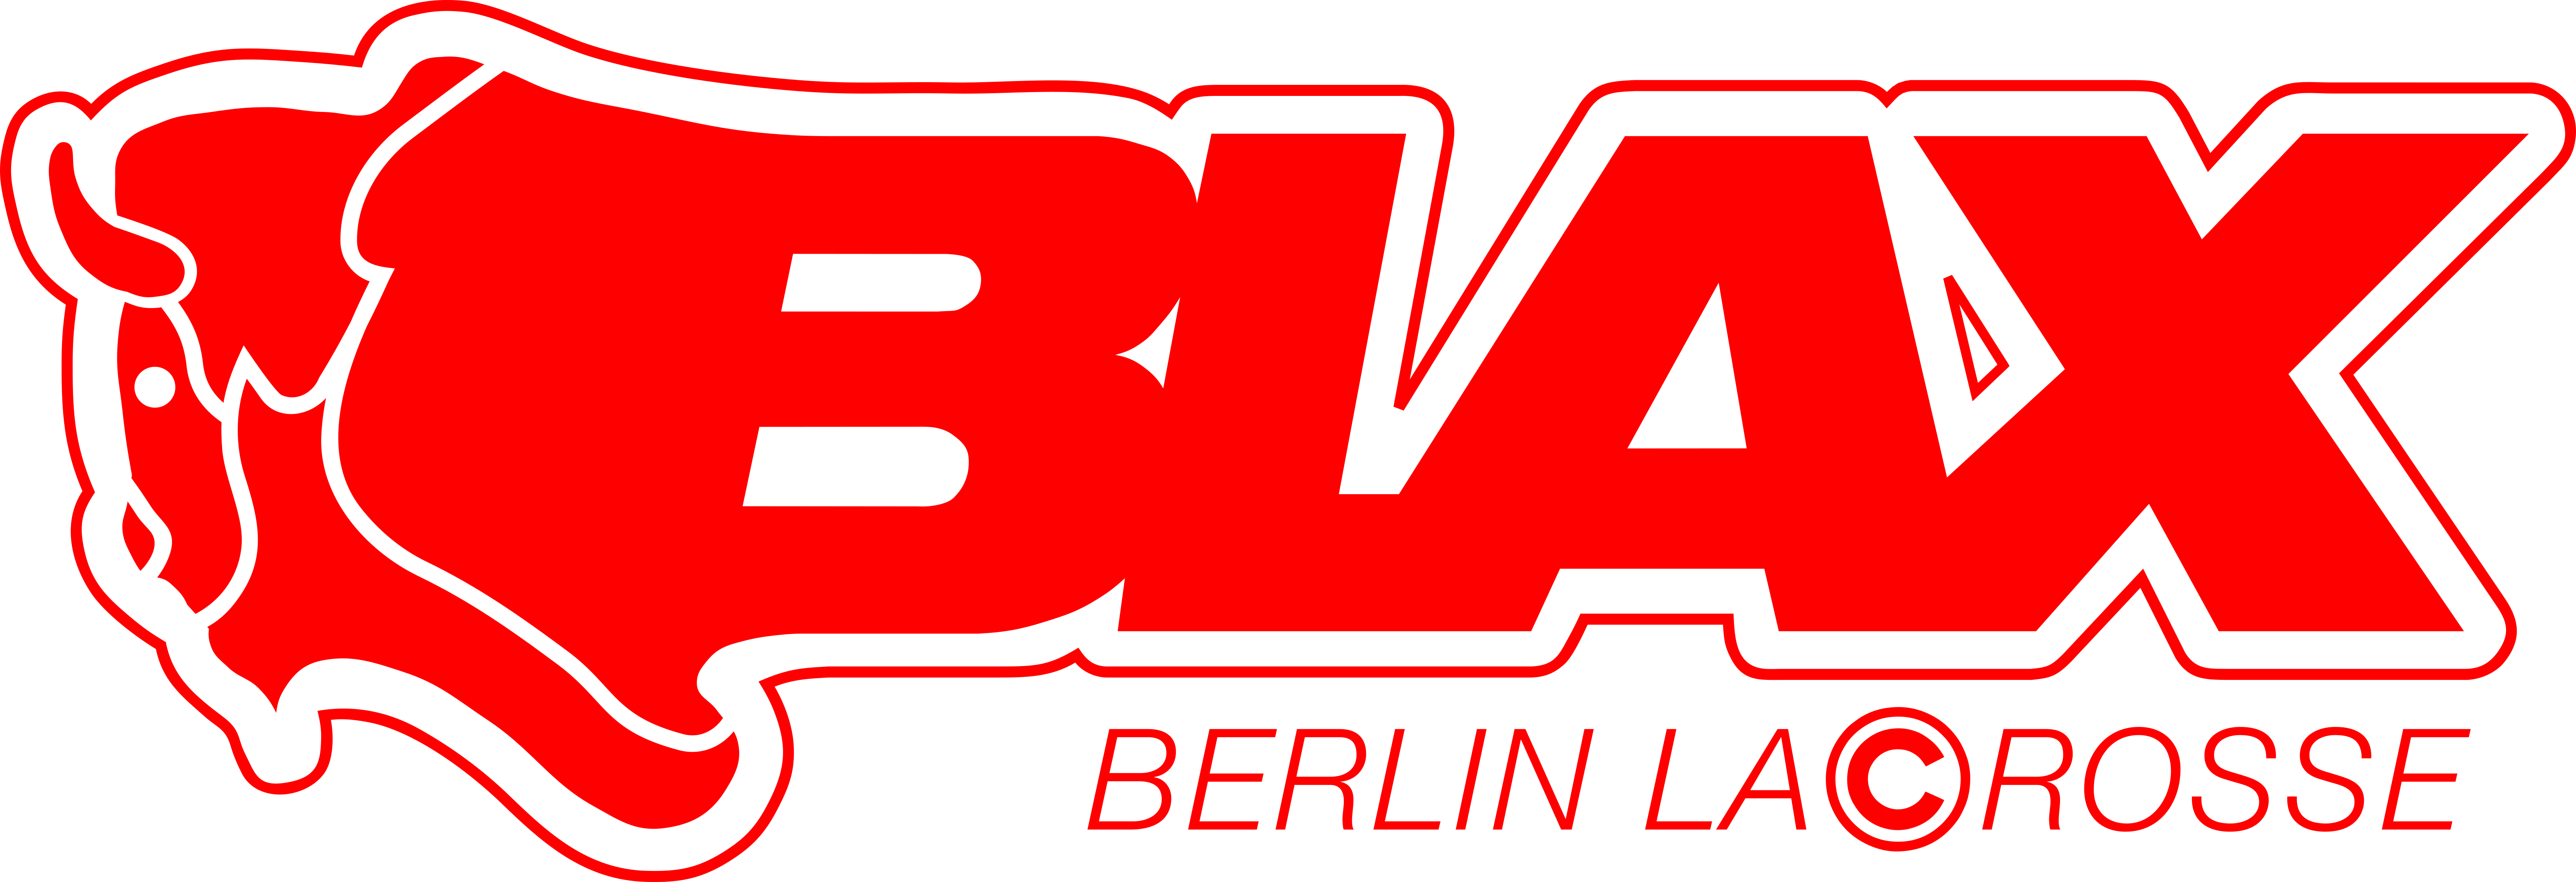 Blax Logo